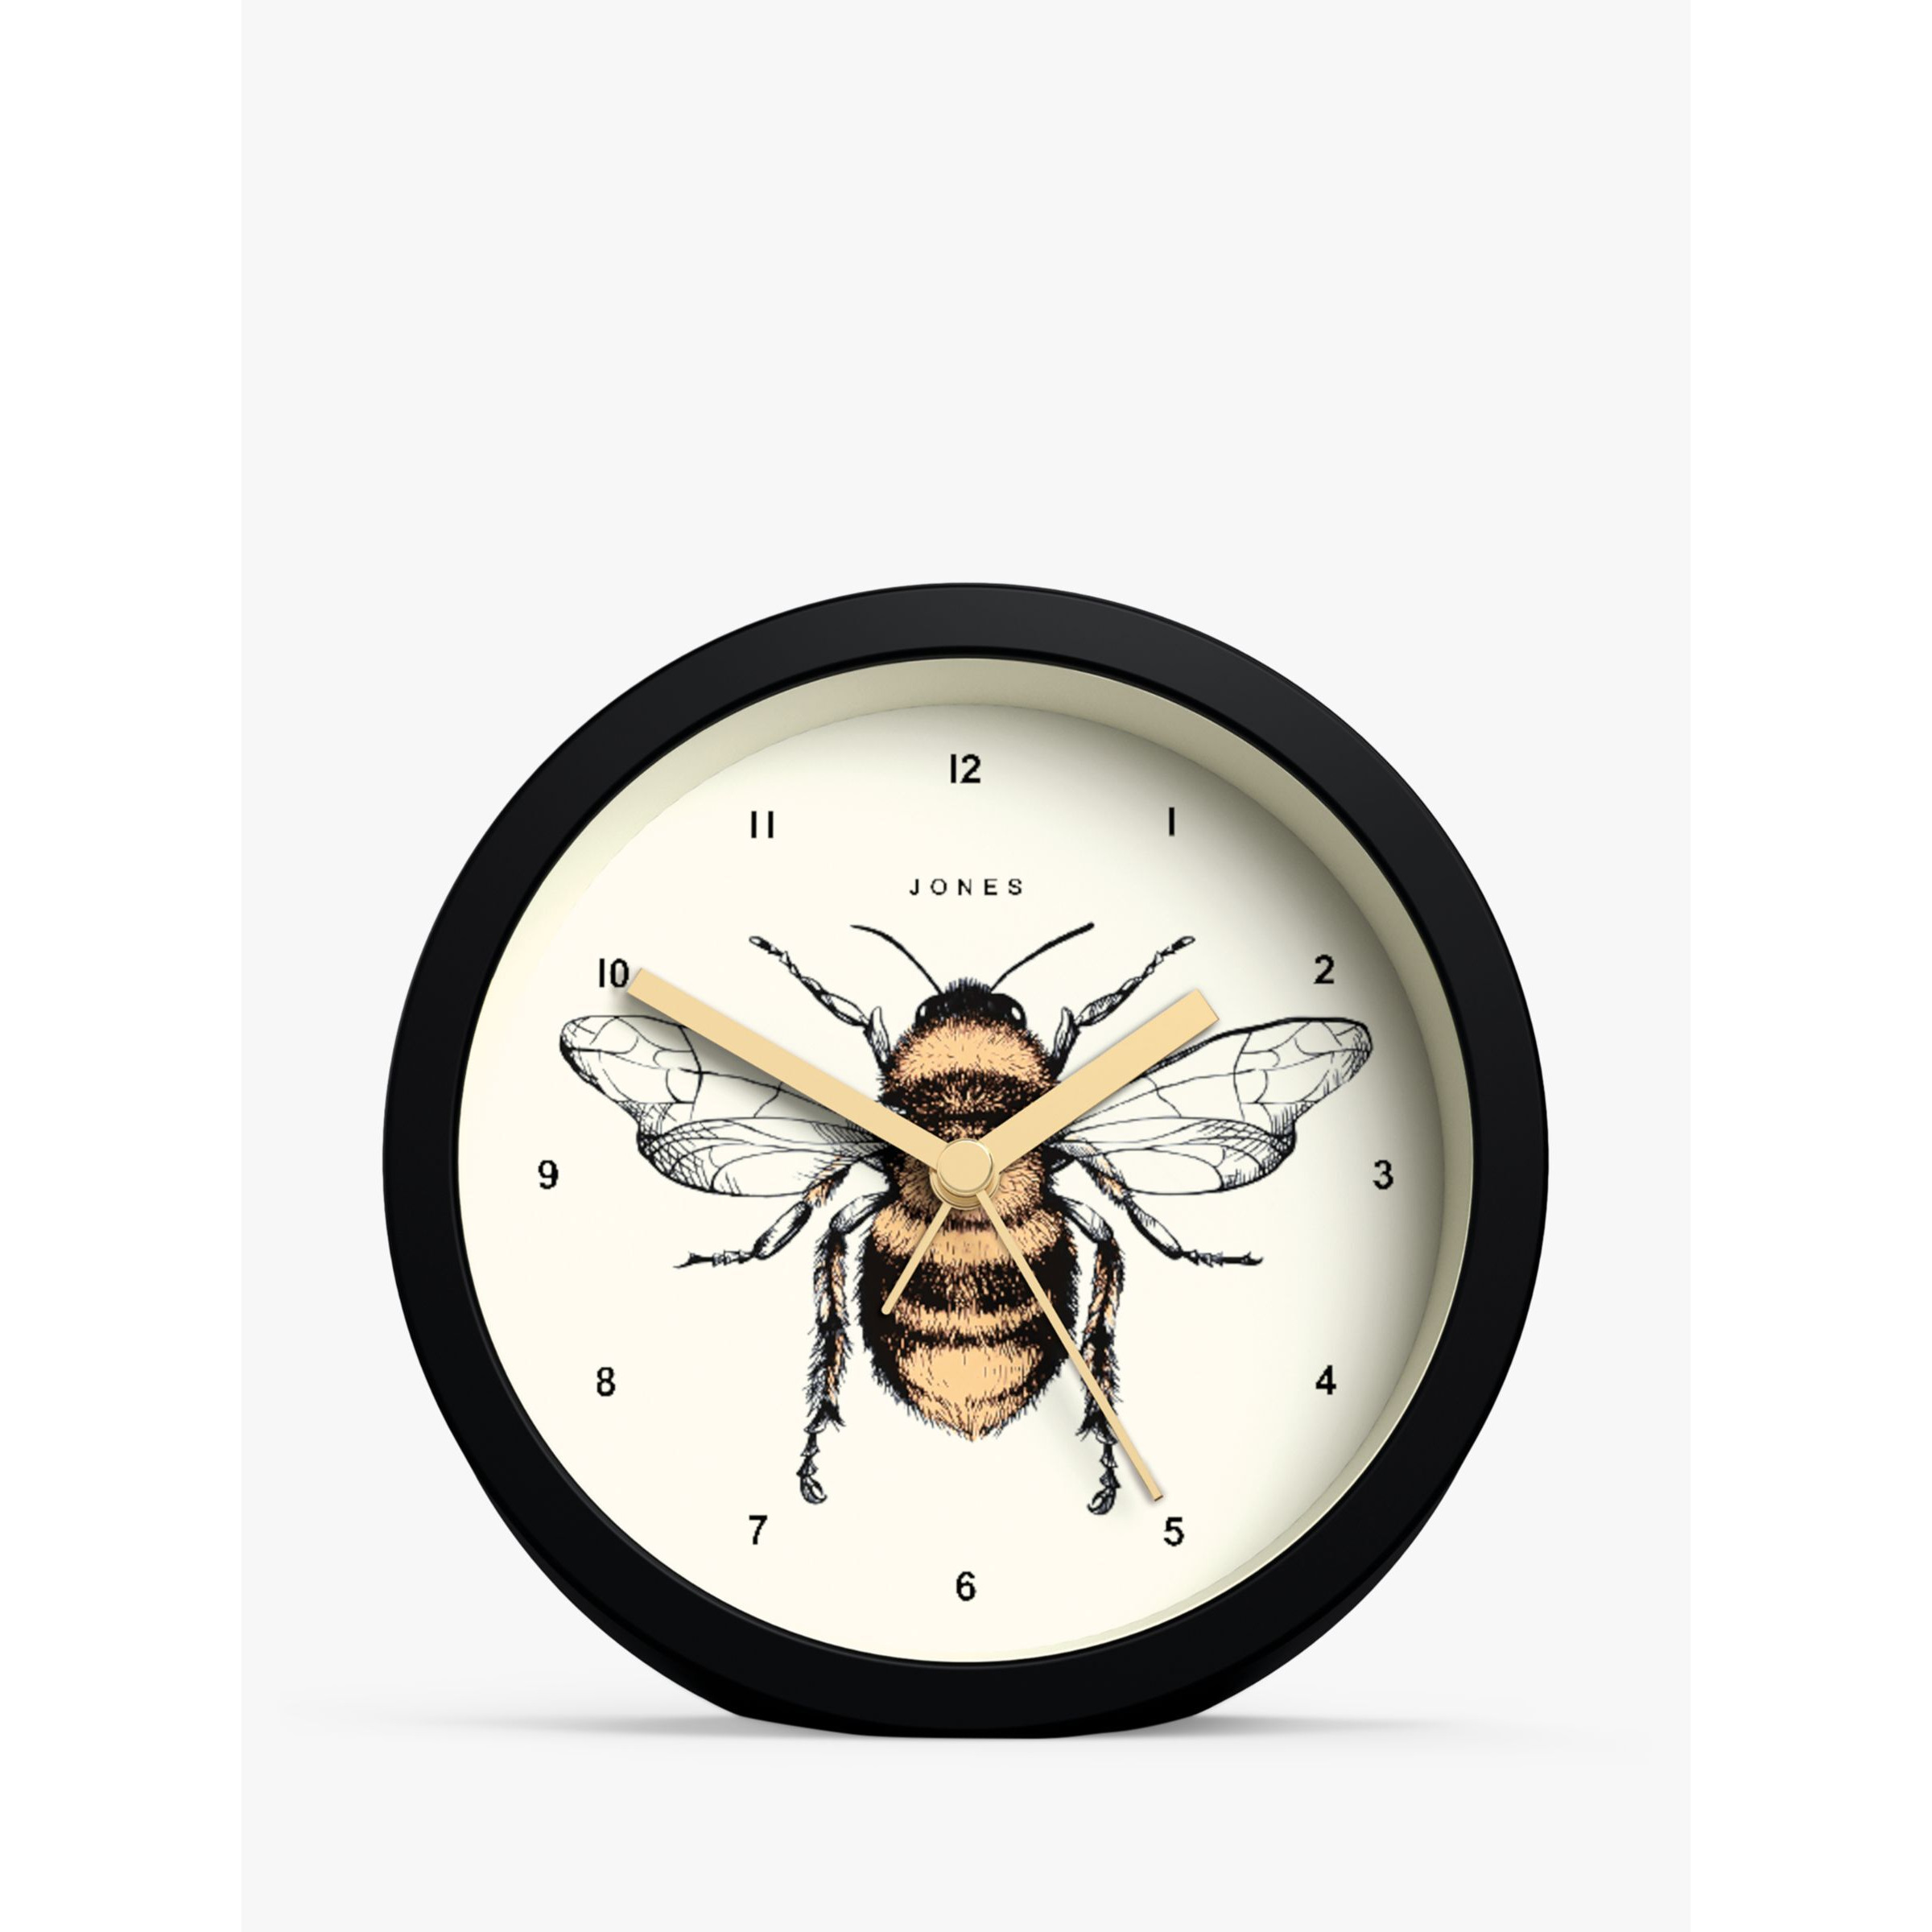 Jones Clocks Bee Analogue Alarm Clock, Black - image 1